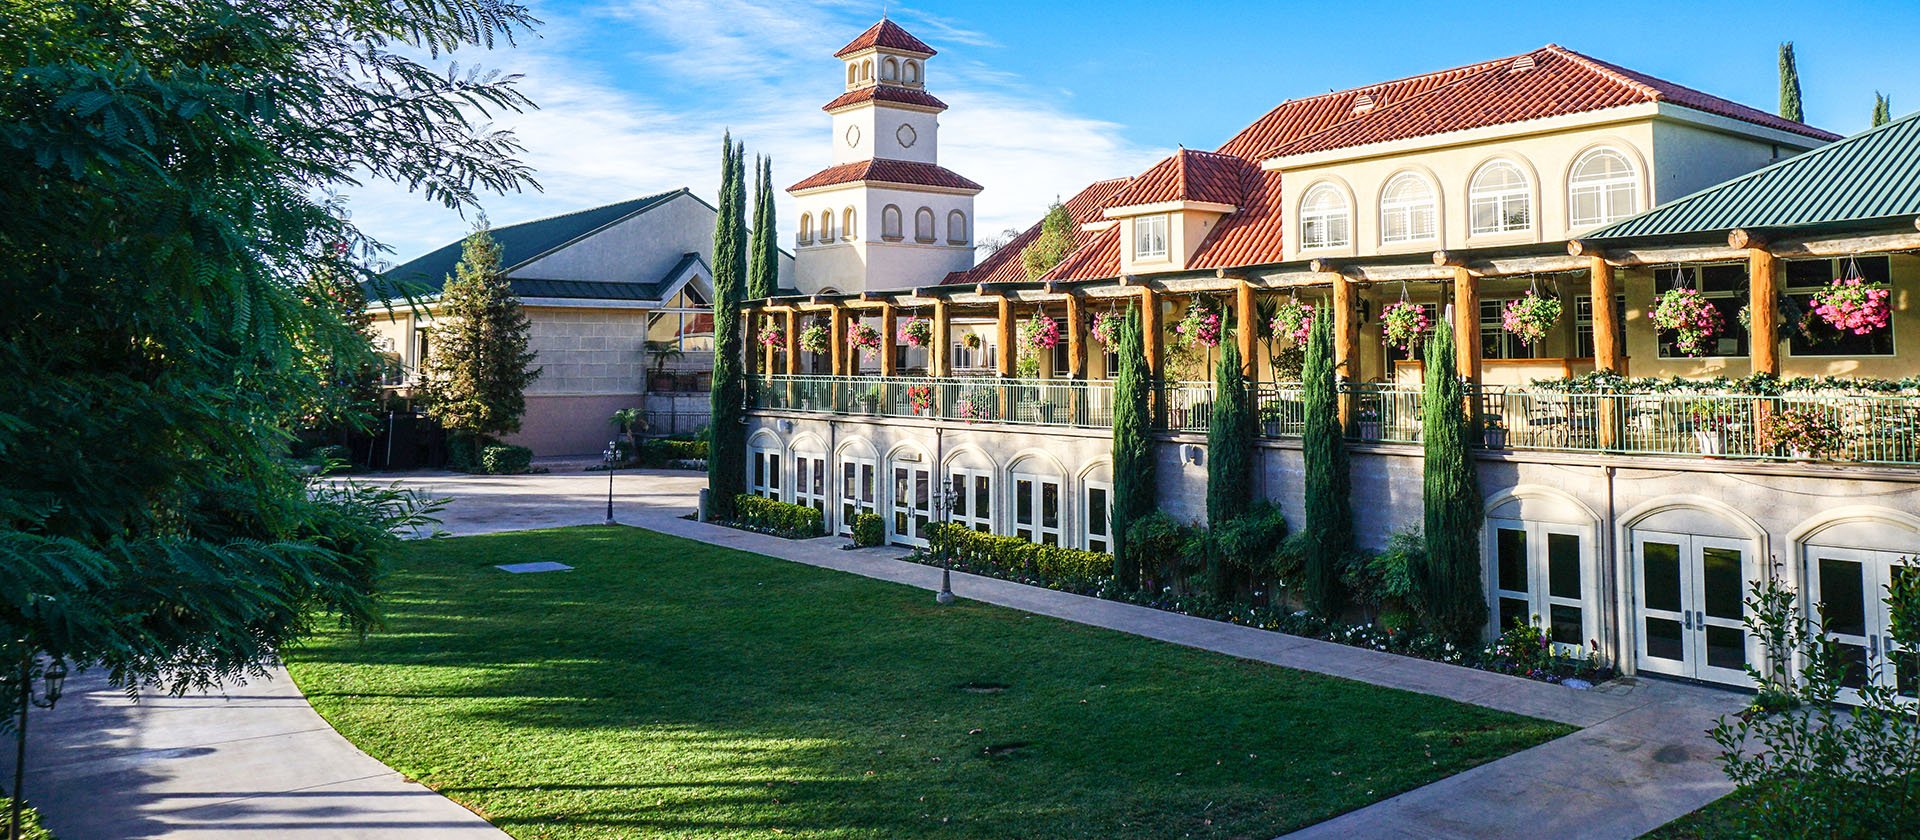 South Coast Winery Resort & Spa in Temecula, California